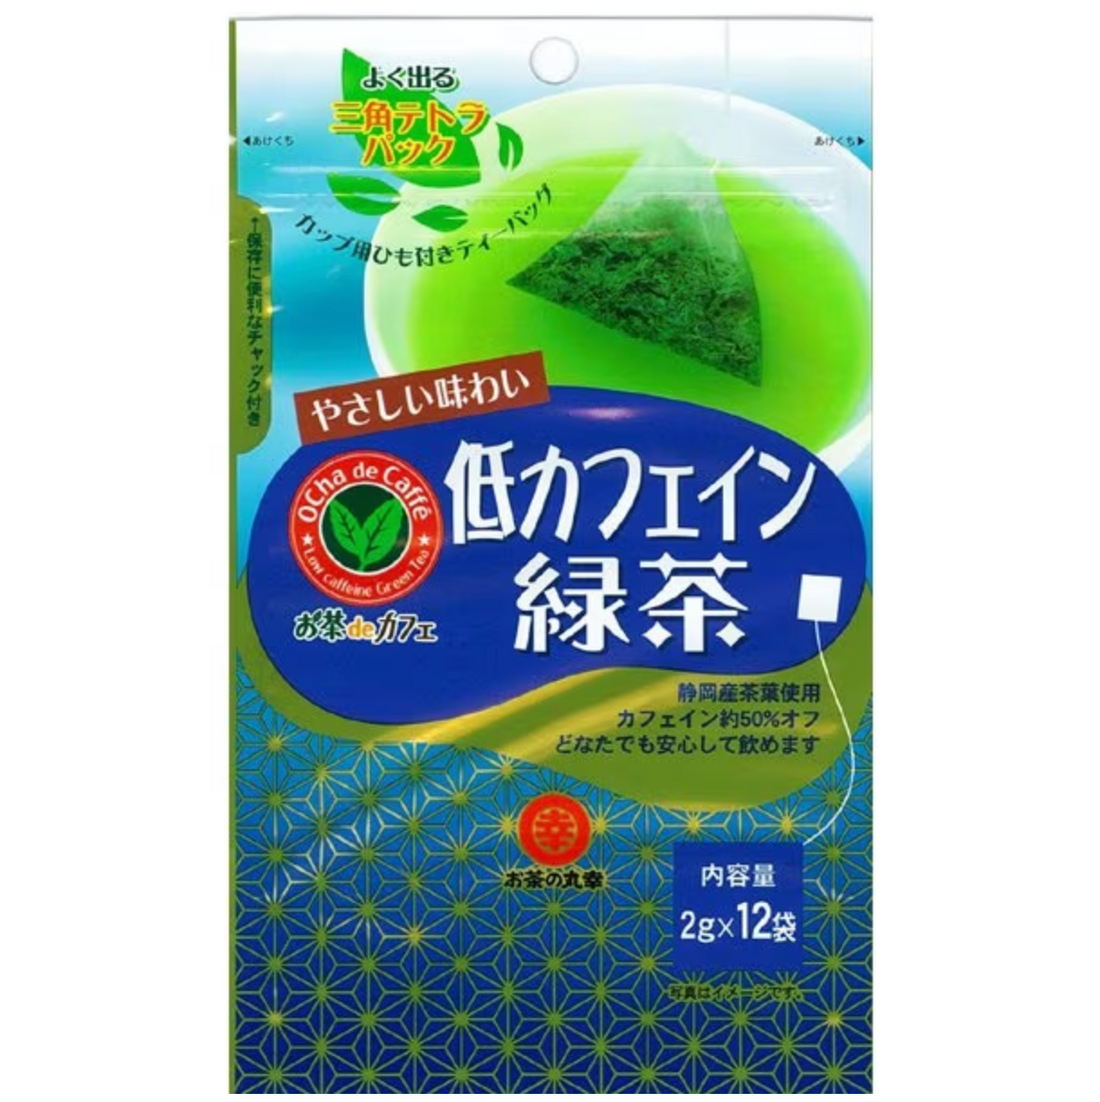 Ochanomaruko Low Caffeine Green Tea Tea Bags 24g (2g x 12 pieces)